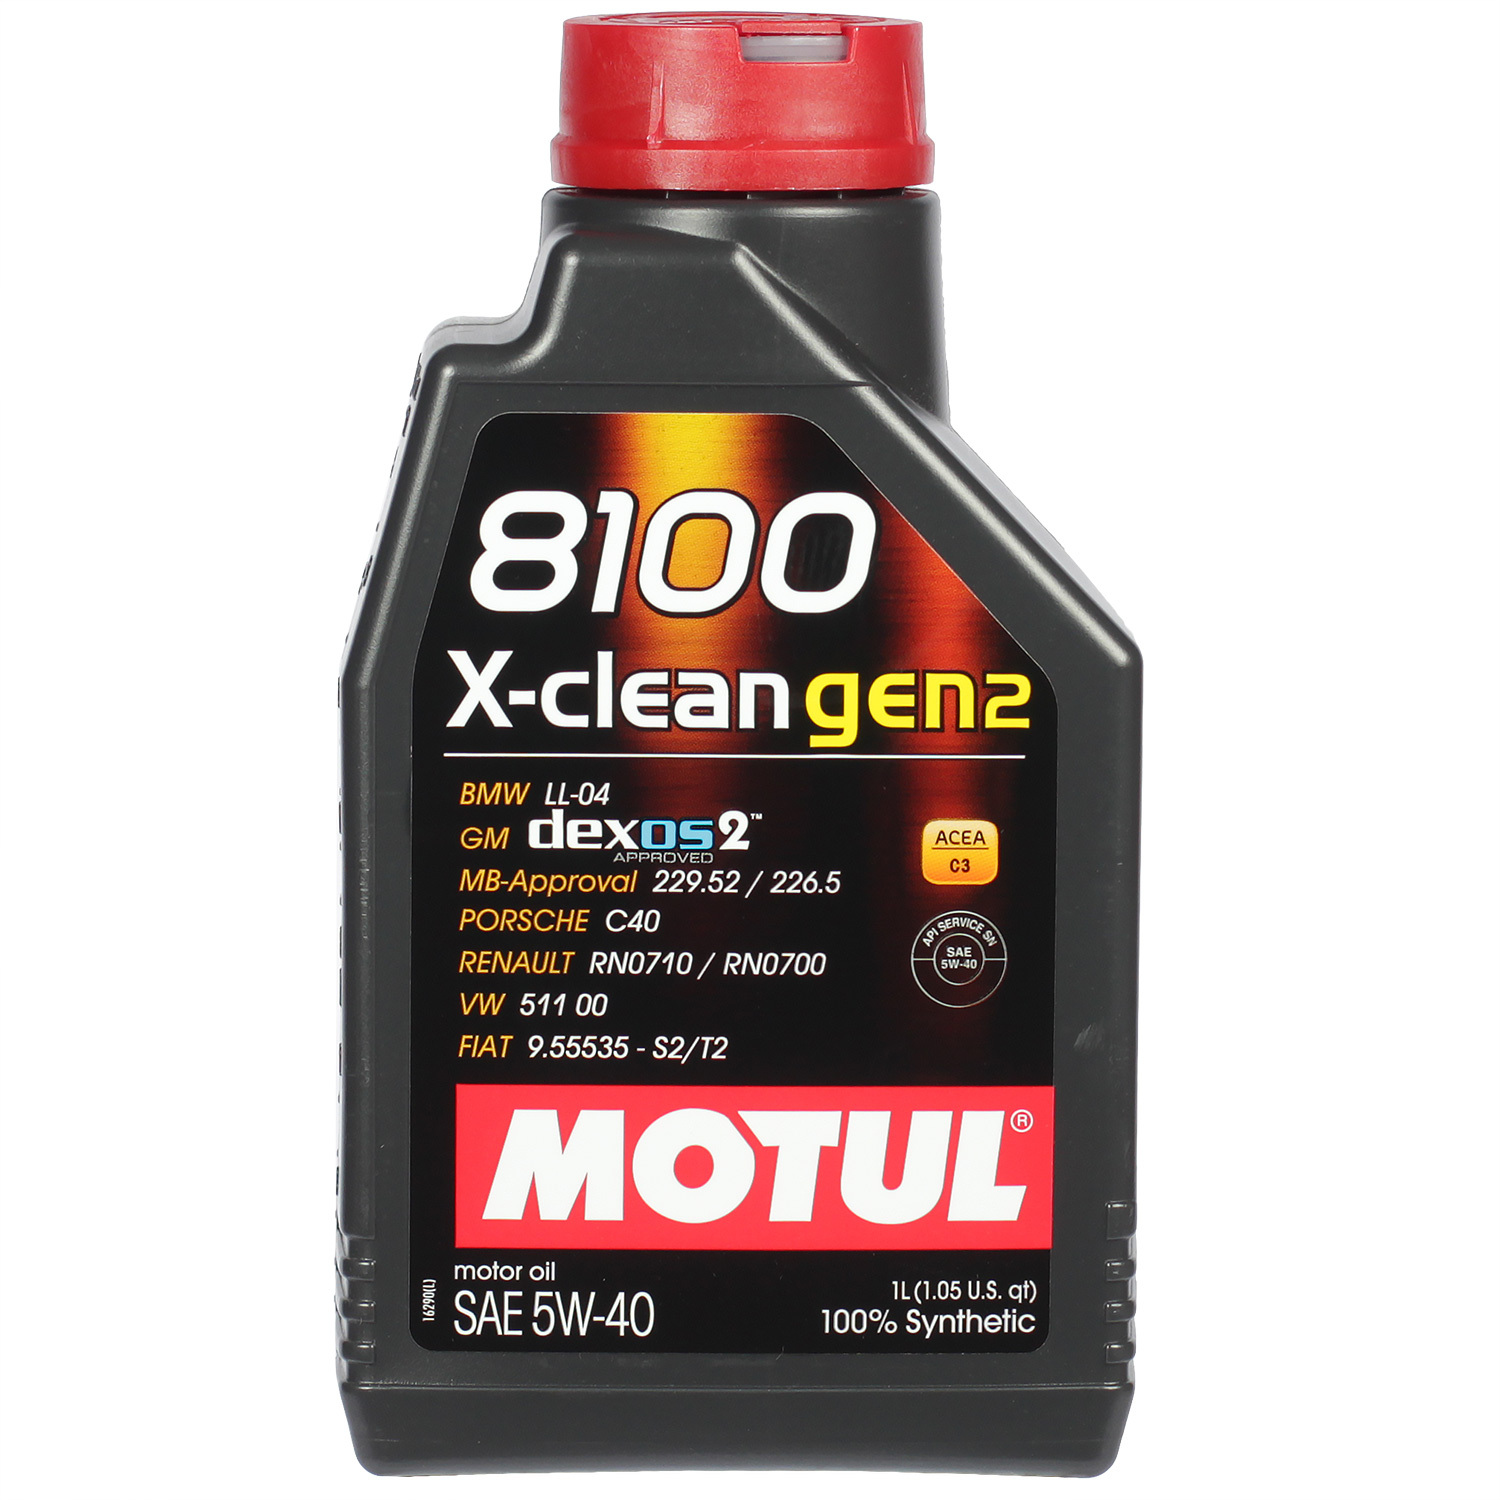 Motul Моторное масло Motul 8100 X-clean gen2 5W-40, 1 л motul моторное масло motul 8100 x clean 5w 30 1 л